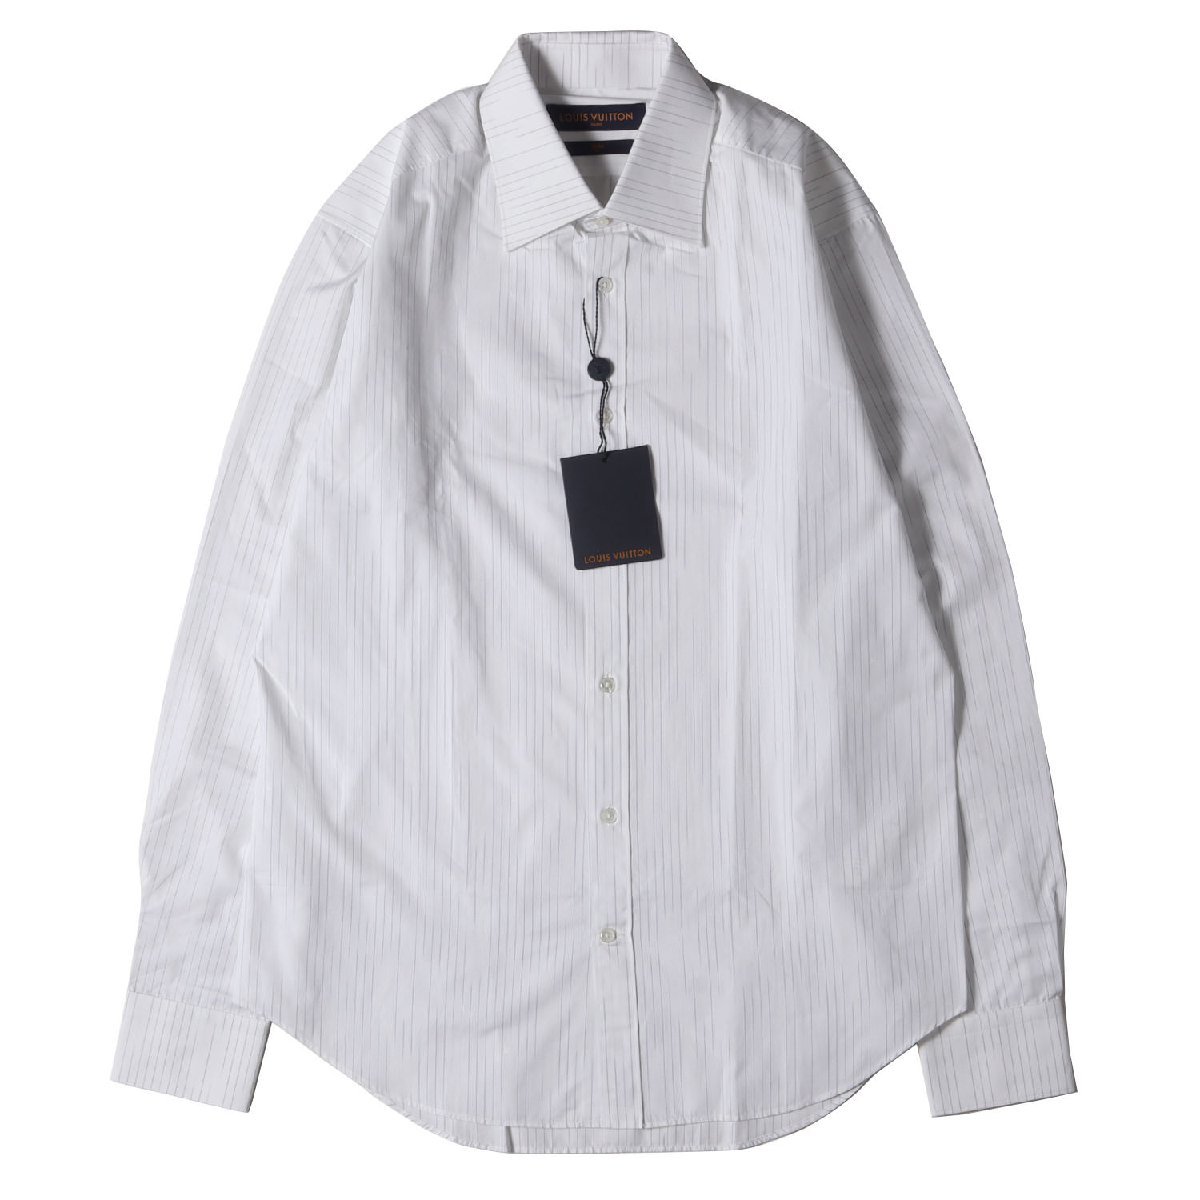  new goods LOUIS VUITTON Louis Vuitton 20SS. worn pinstripe kata way Hori zontaru color Broad dress shirt white 41/16